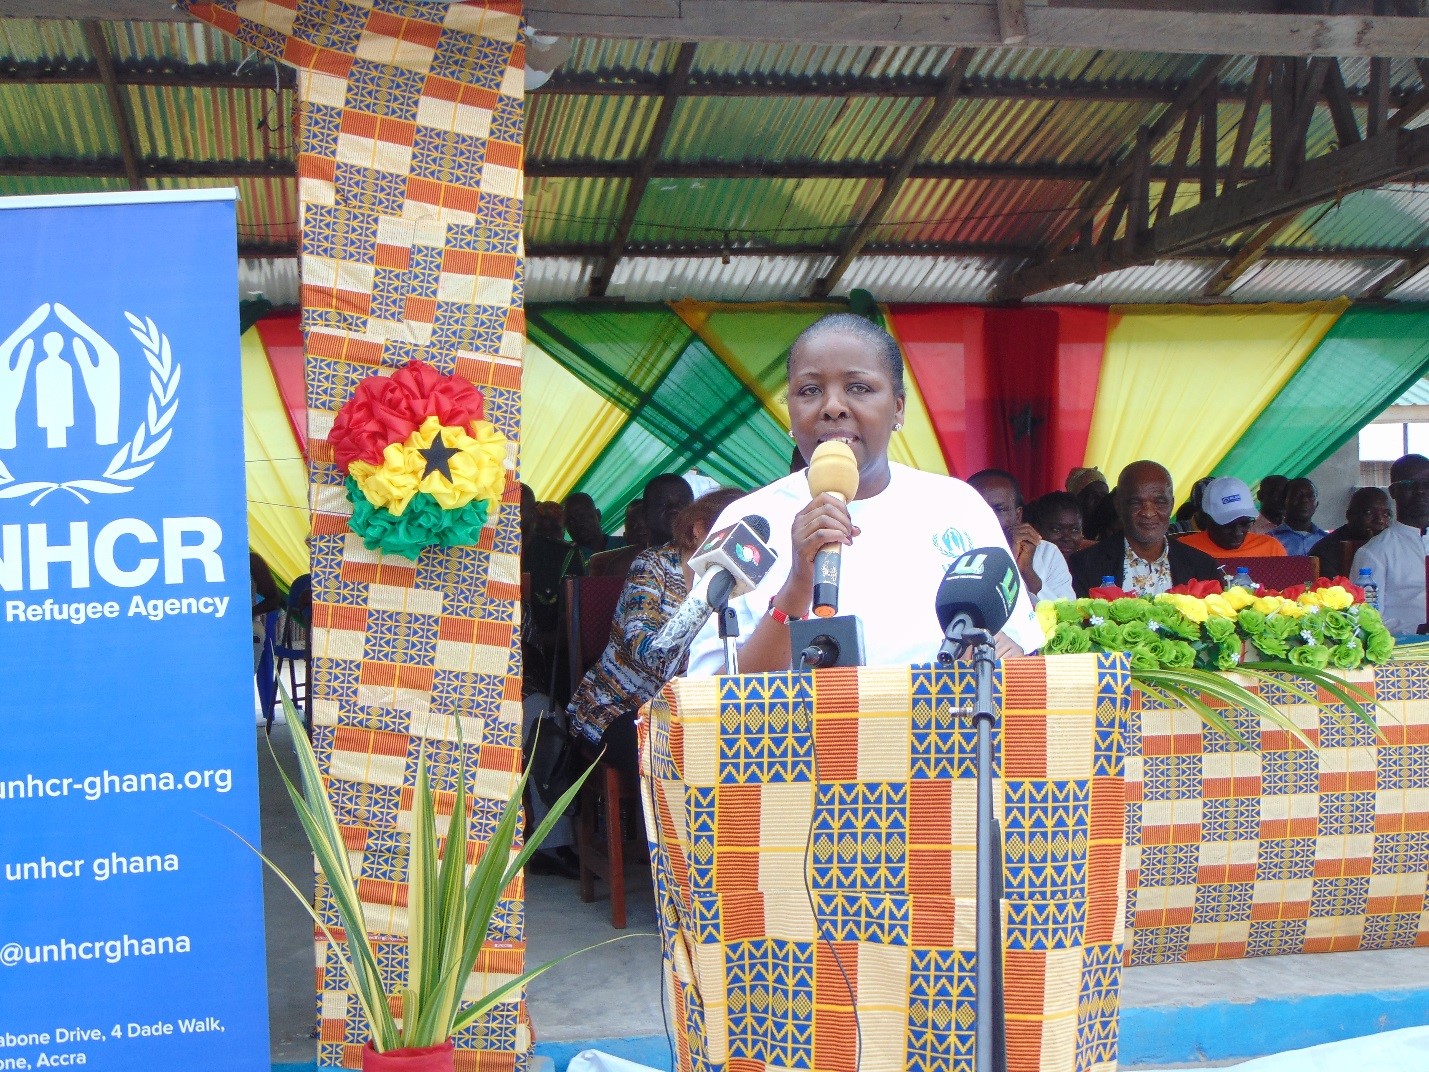 UNHCR Representative, Ms. Esther Kiragu in an address